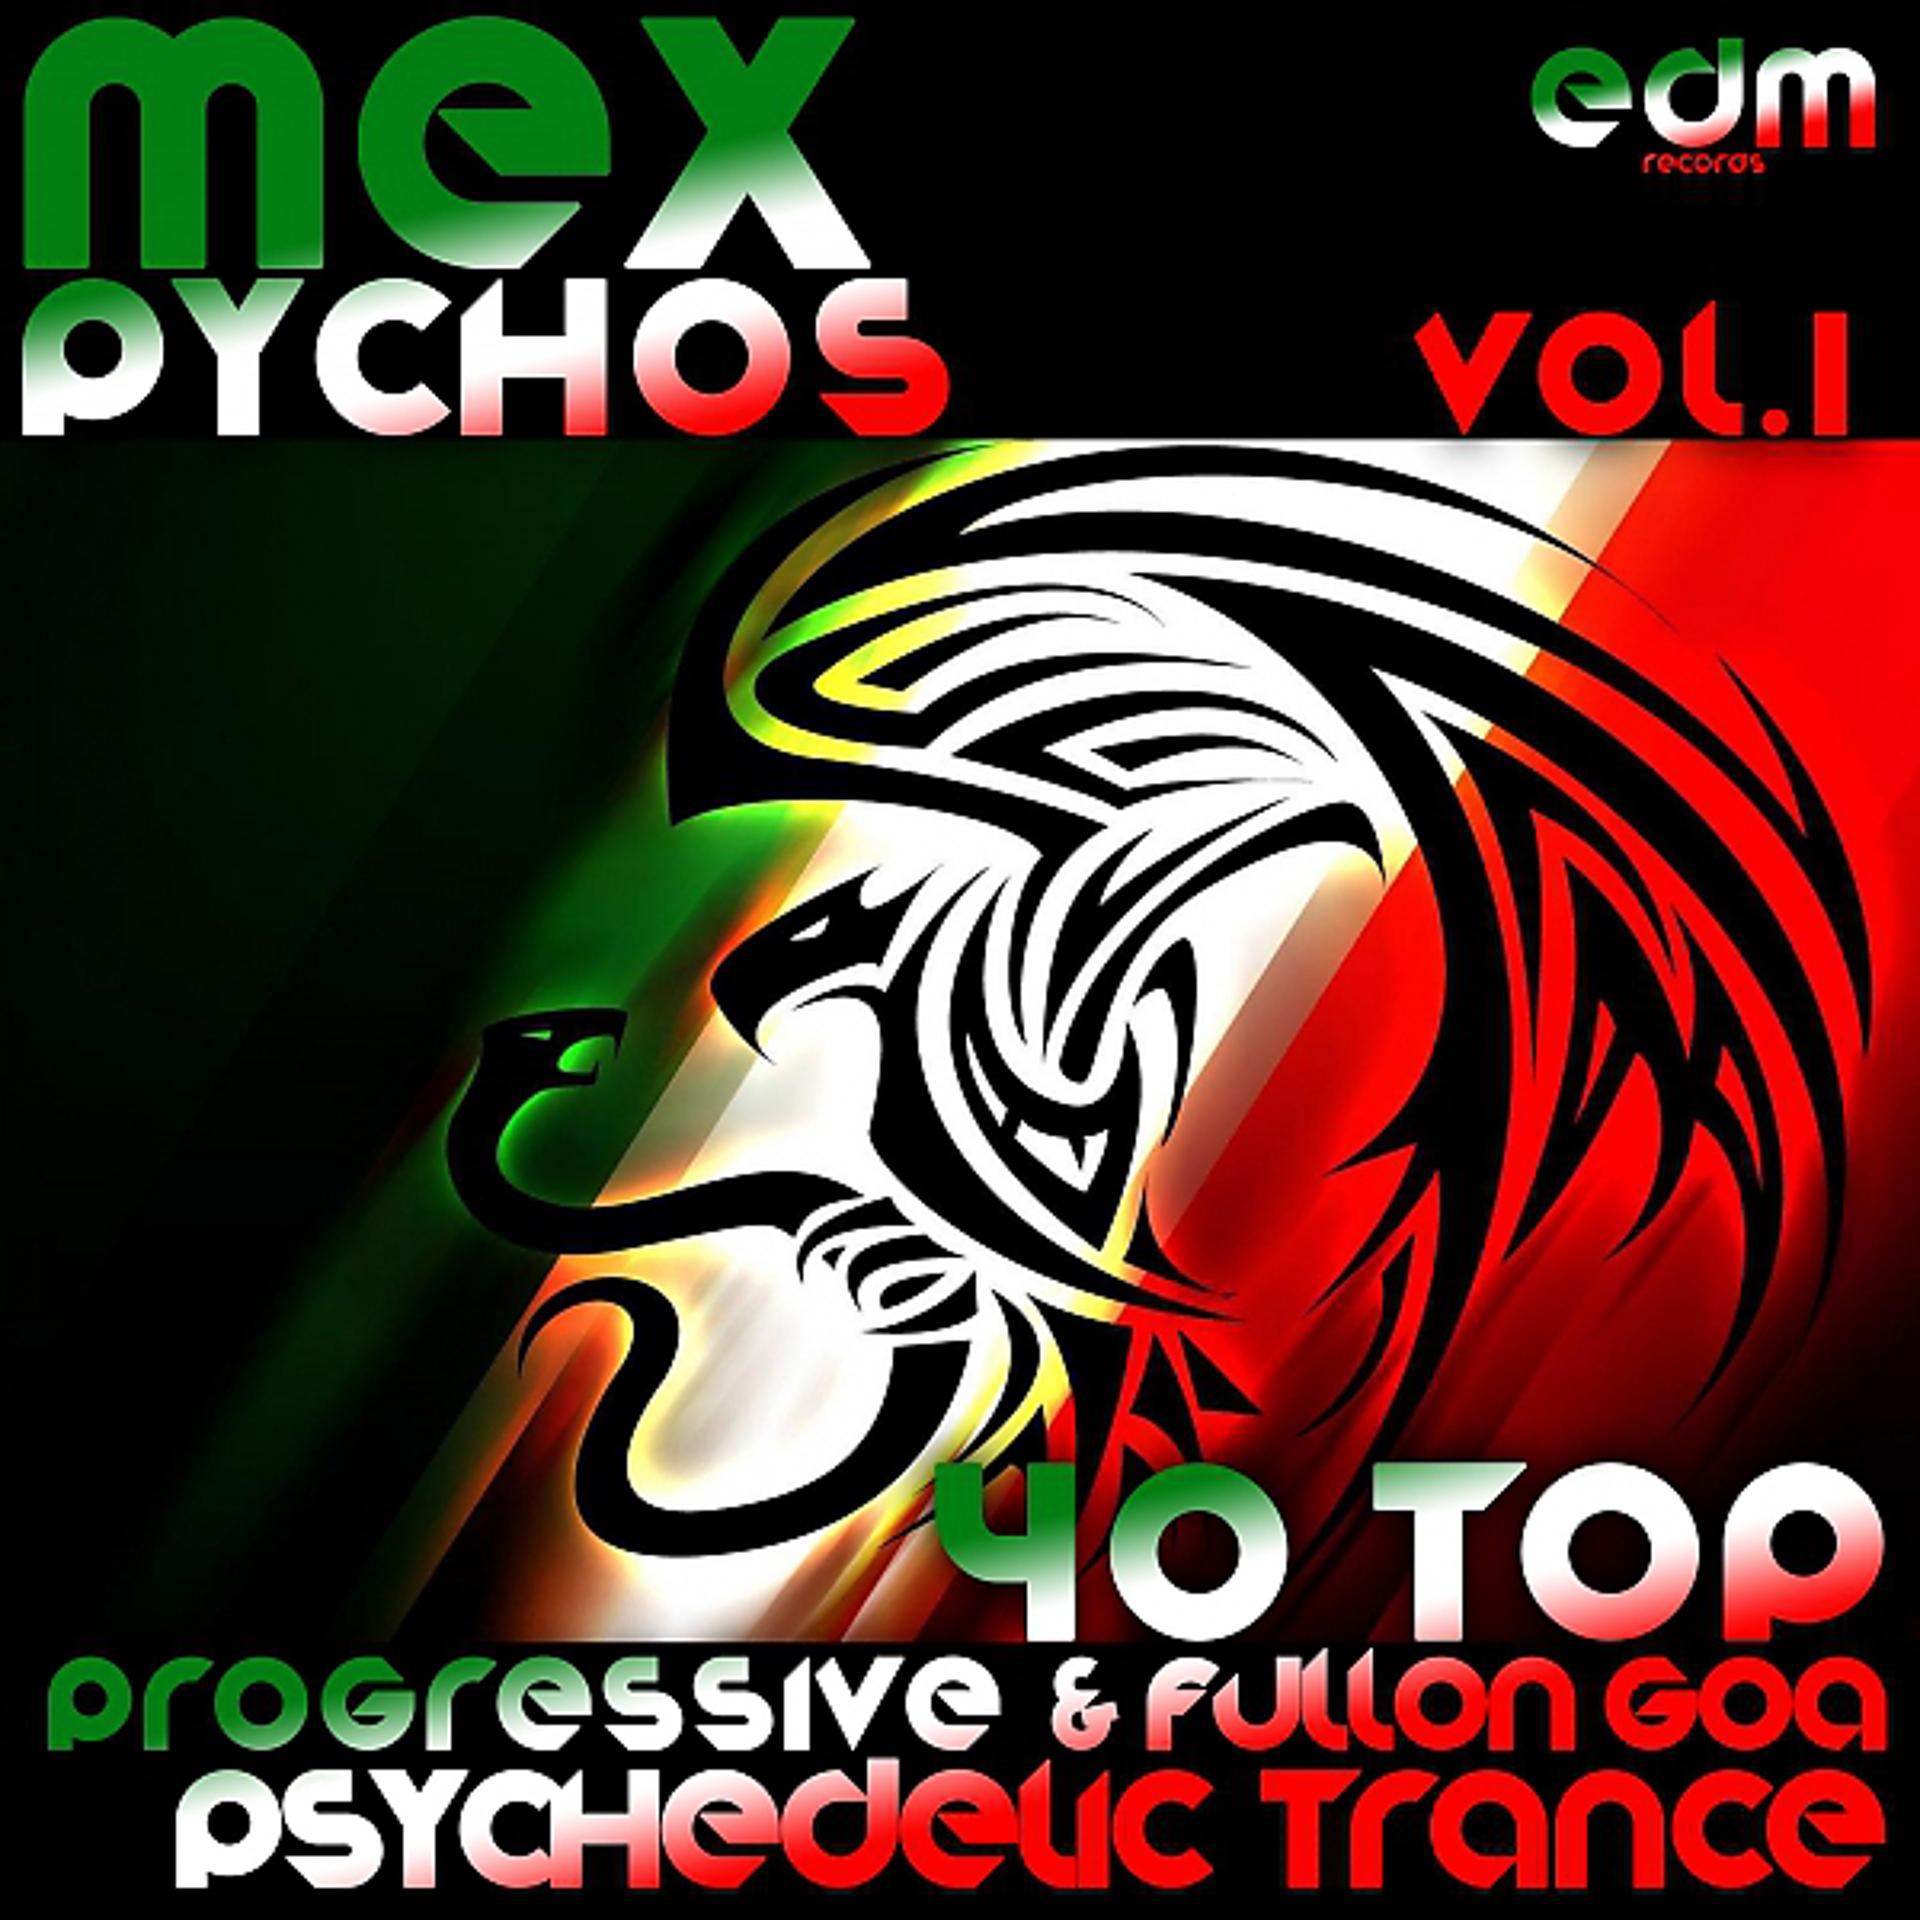 Постер альбома Mex Psycho v1 - 40 Top Progressive &  Fullon Goa Psychedelic Trance Hits Mega Blasters